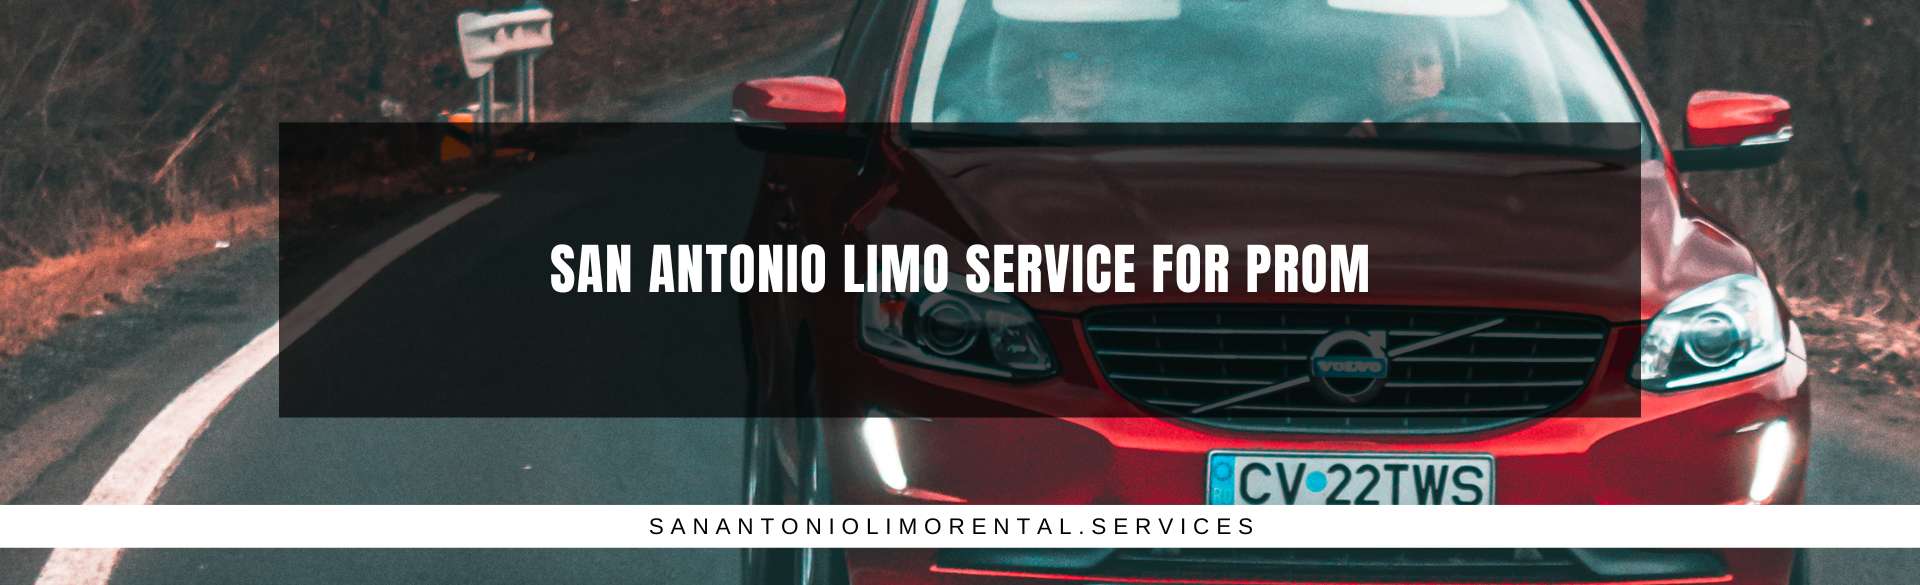 San Antonio Limo Service for Prom